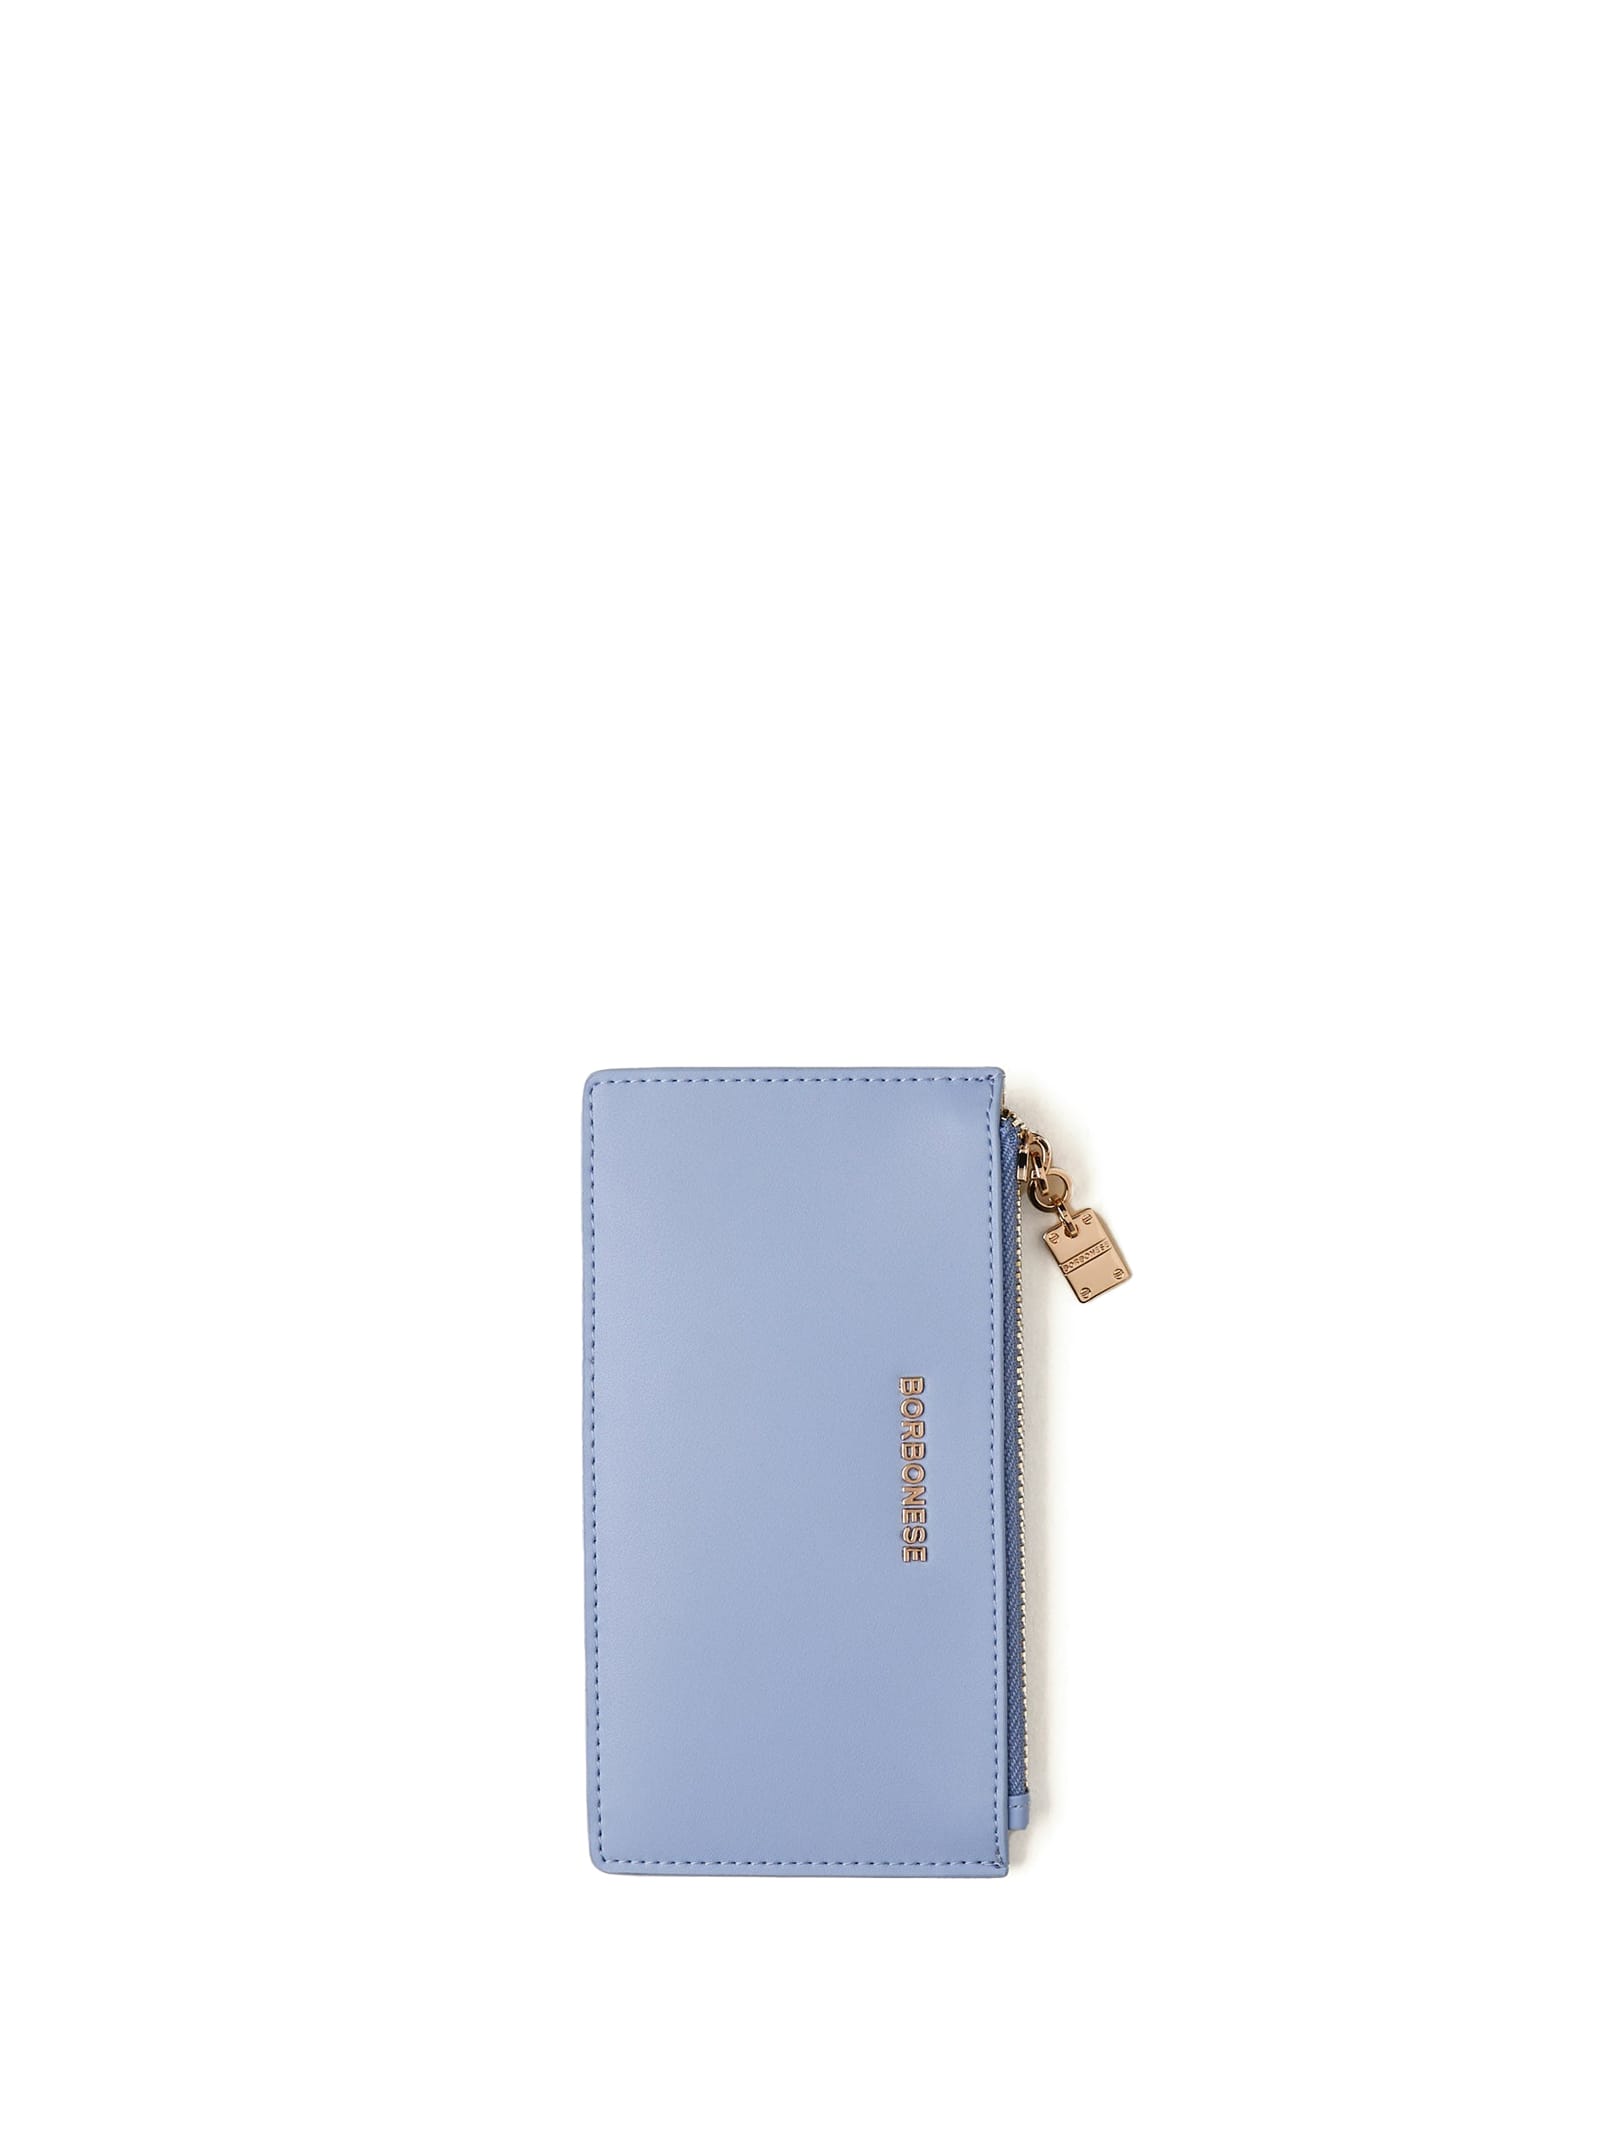 Medium Light Blue Leather Card Holder